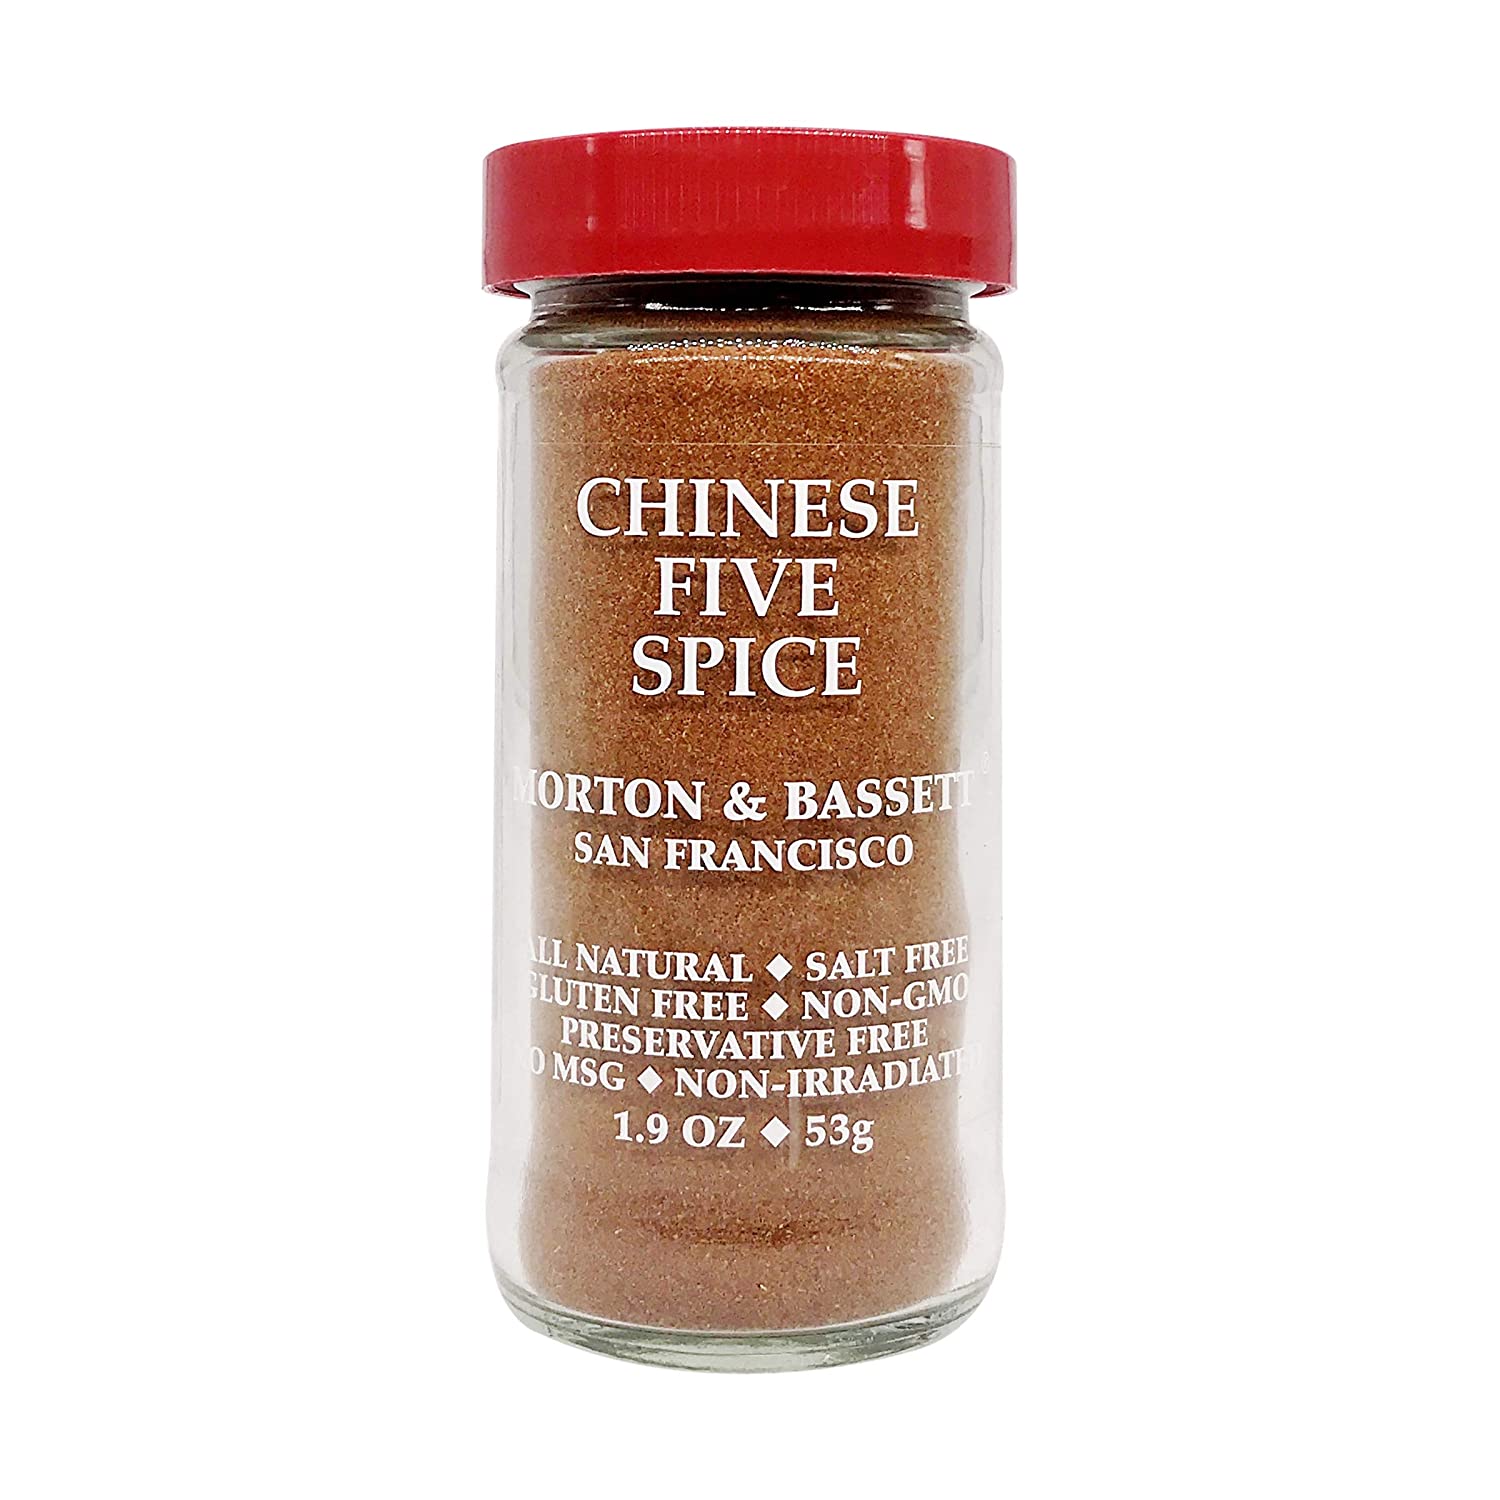 Morton & Bassett Chinese 5 Spice